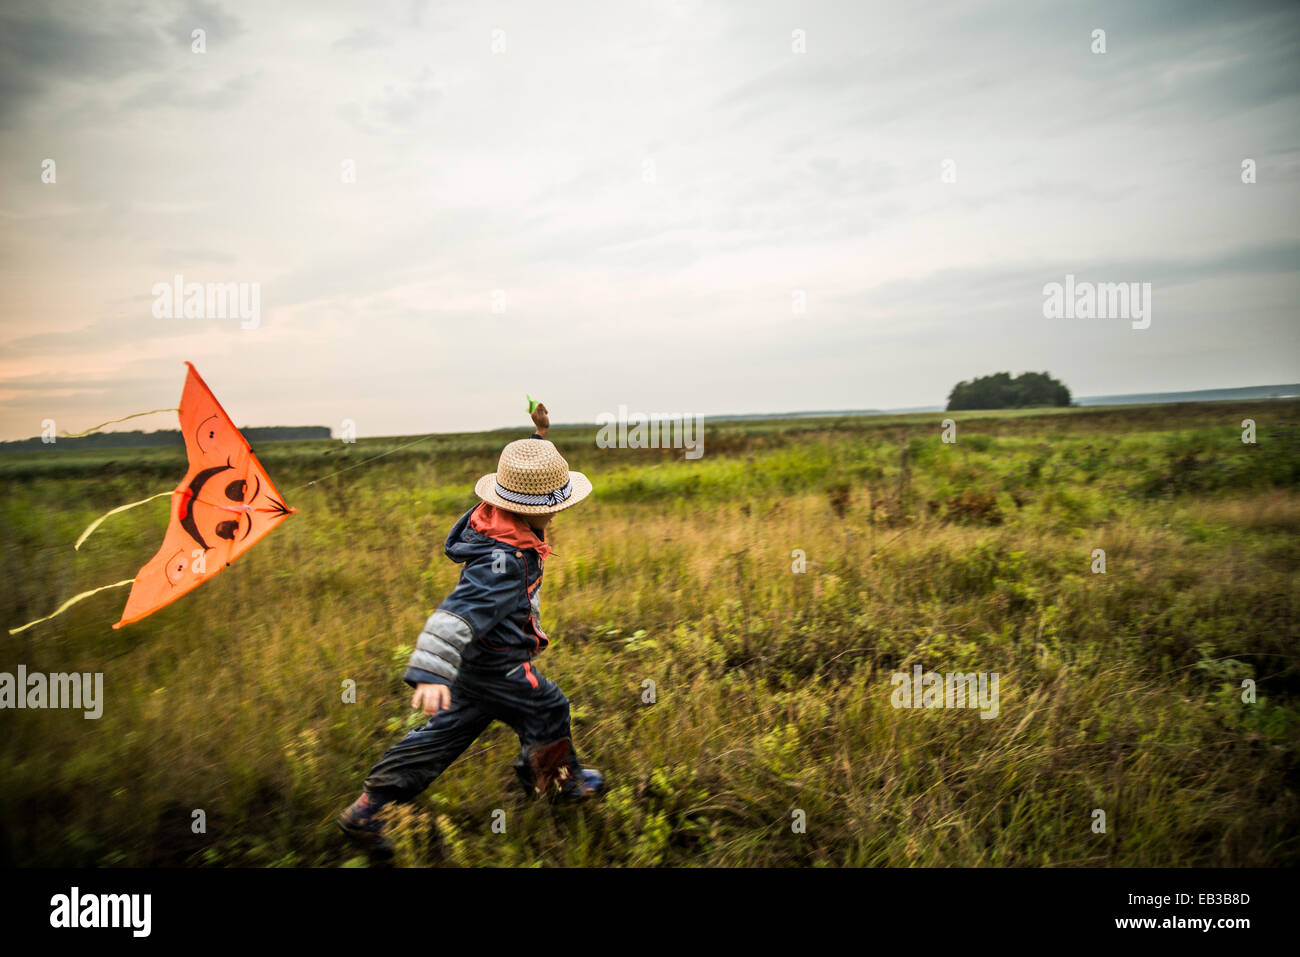 Caucasian boy flying kite in rural field Stock Photo